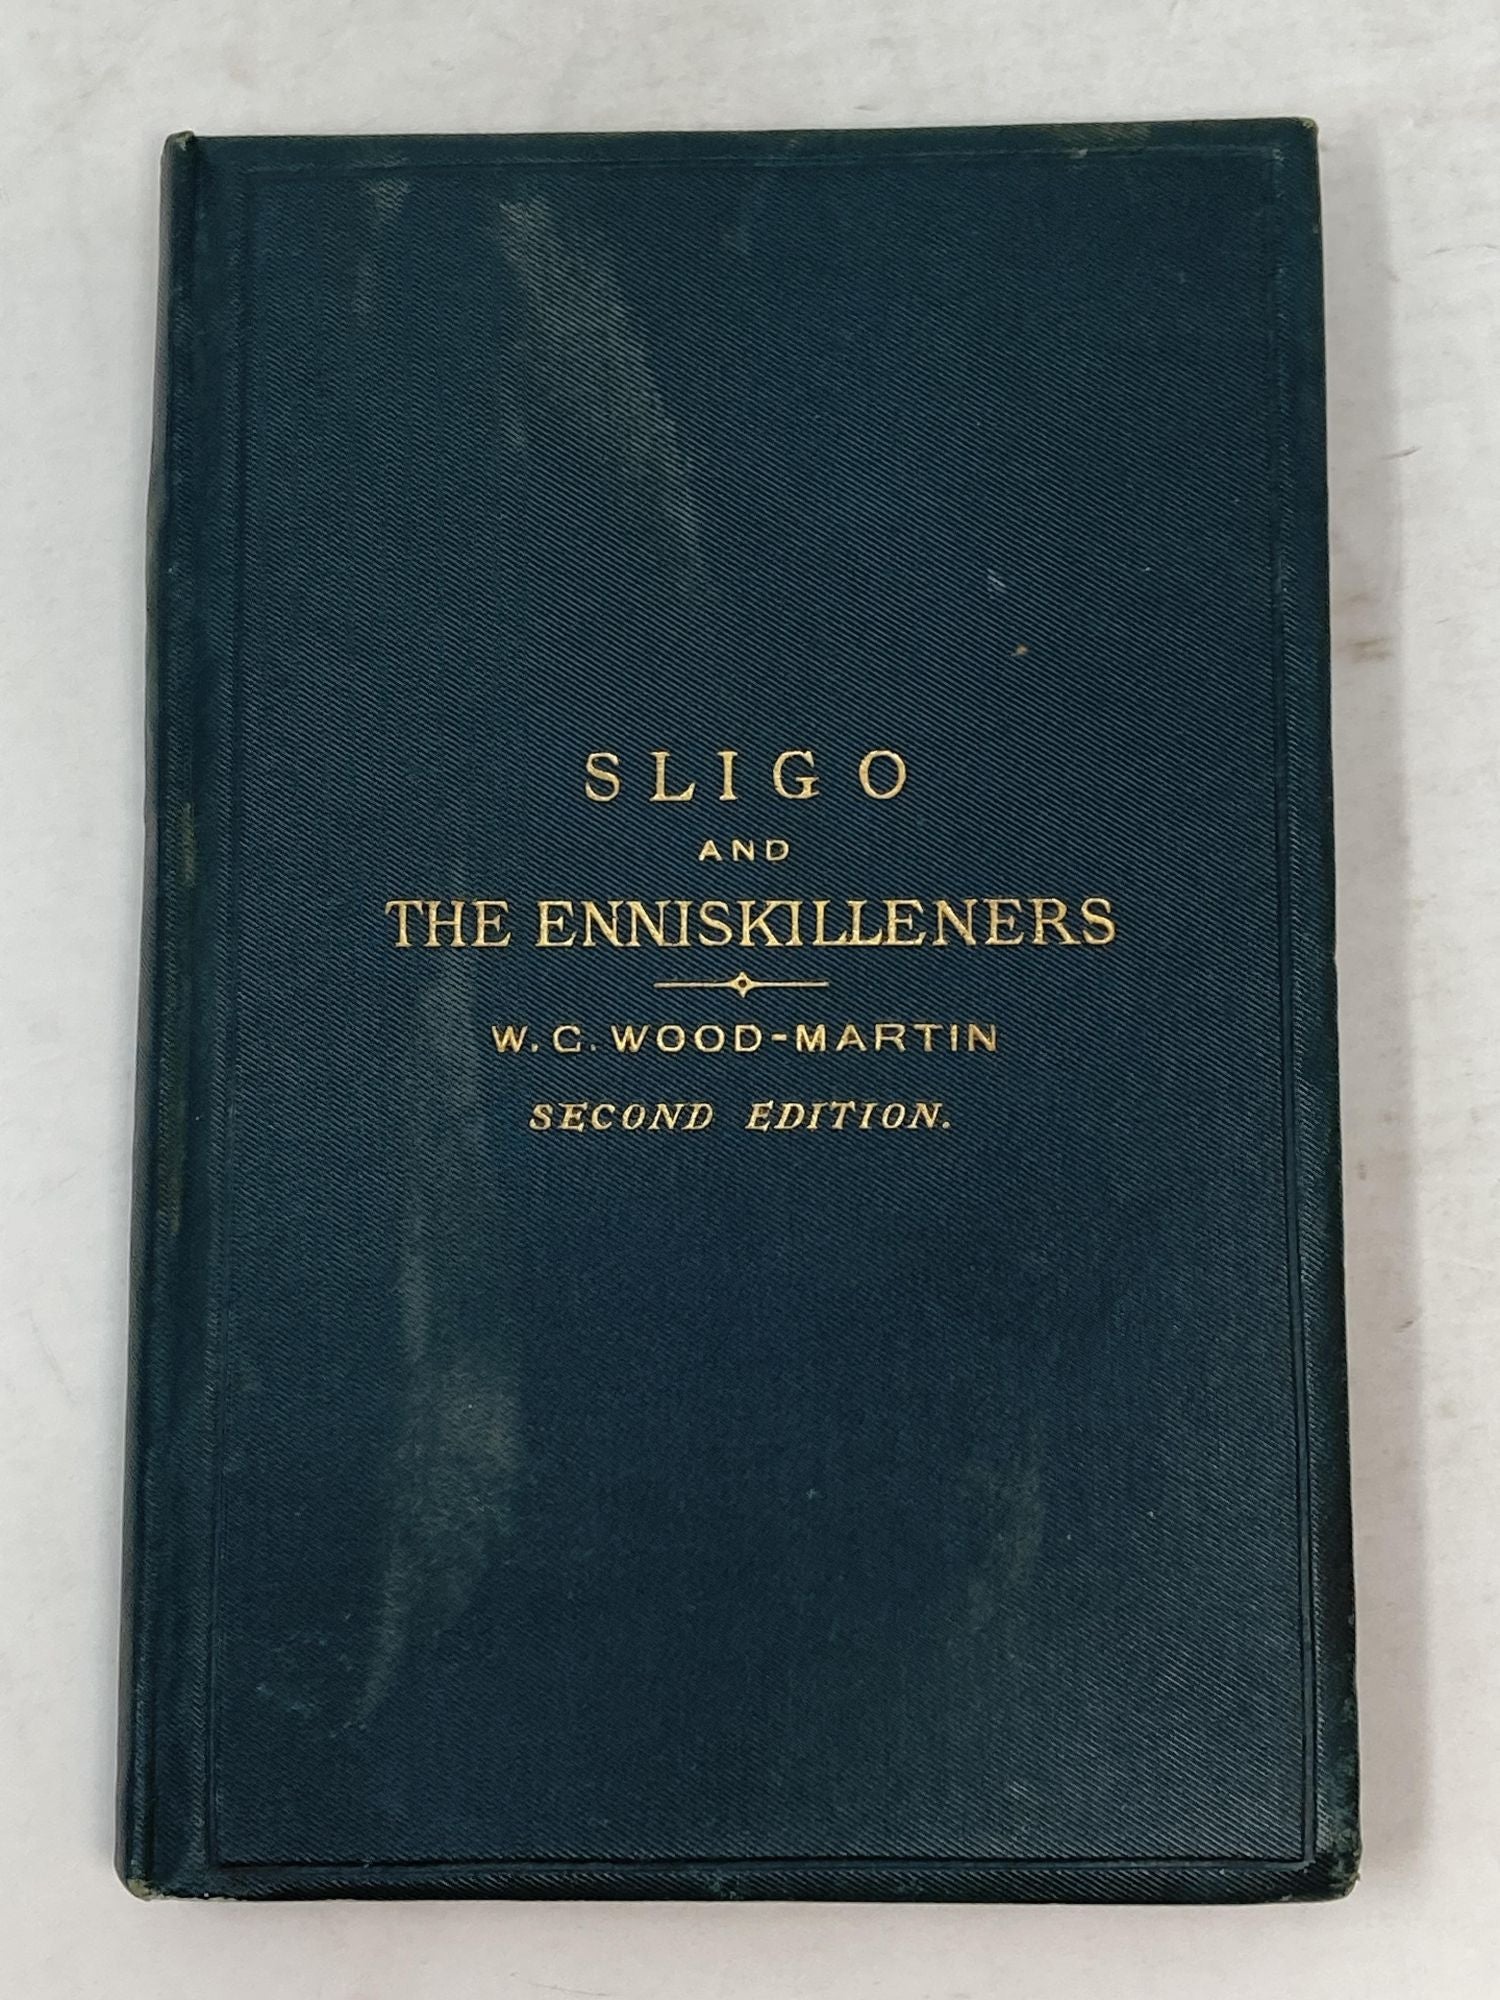 Wood-Martin, W.G. - Sligo and the Enniskilleners. From 1688-1691 (Signed)